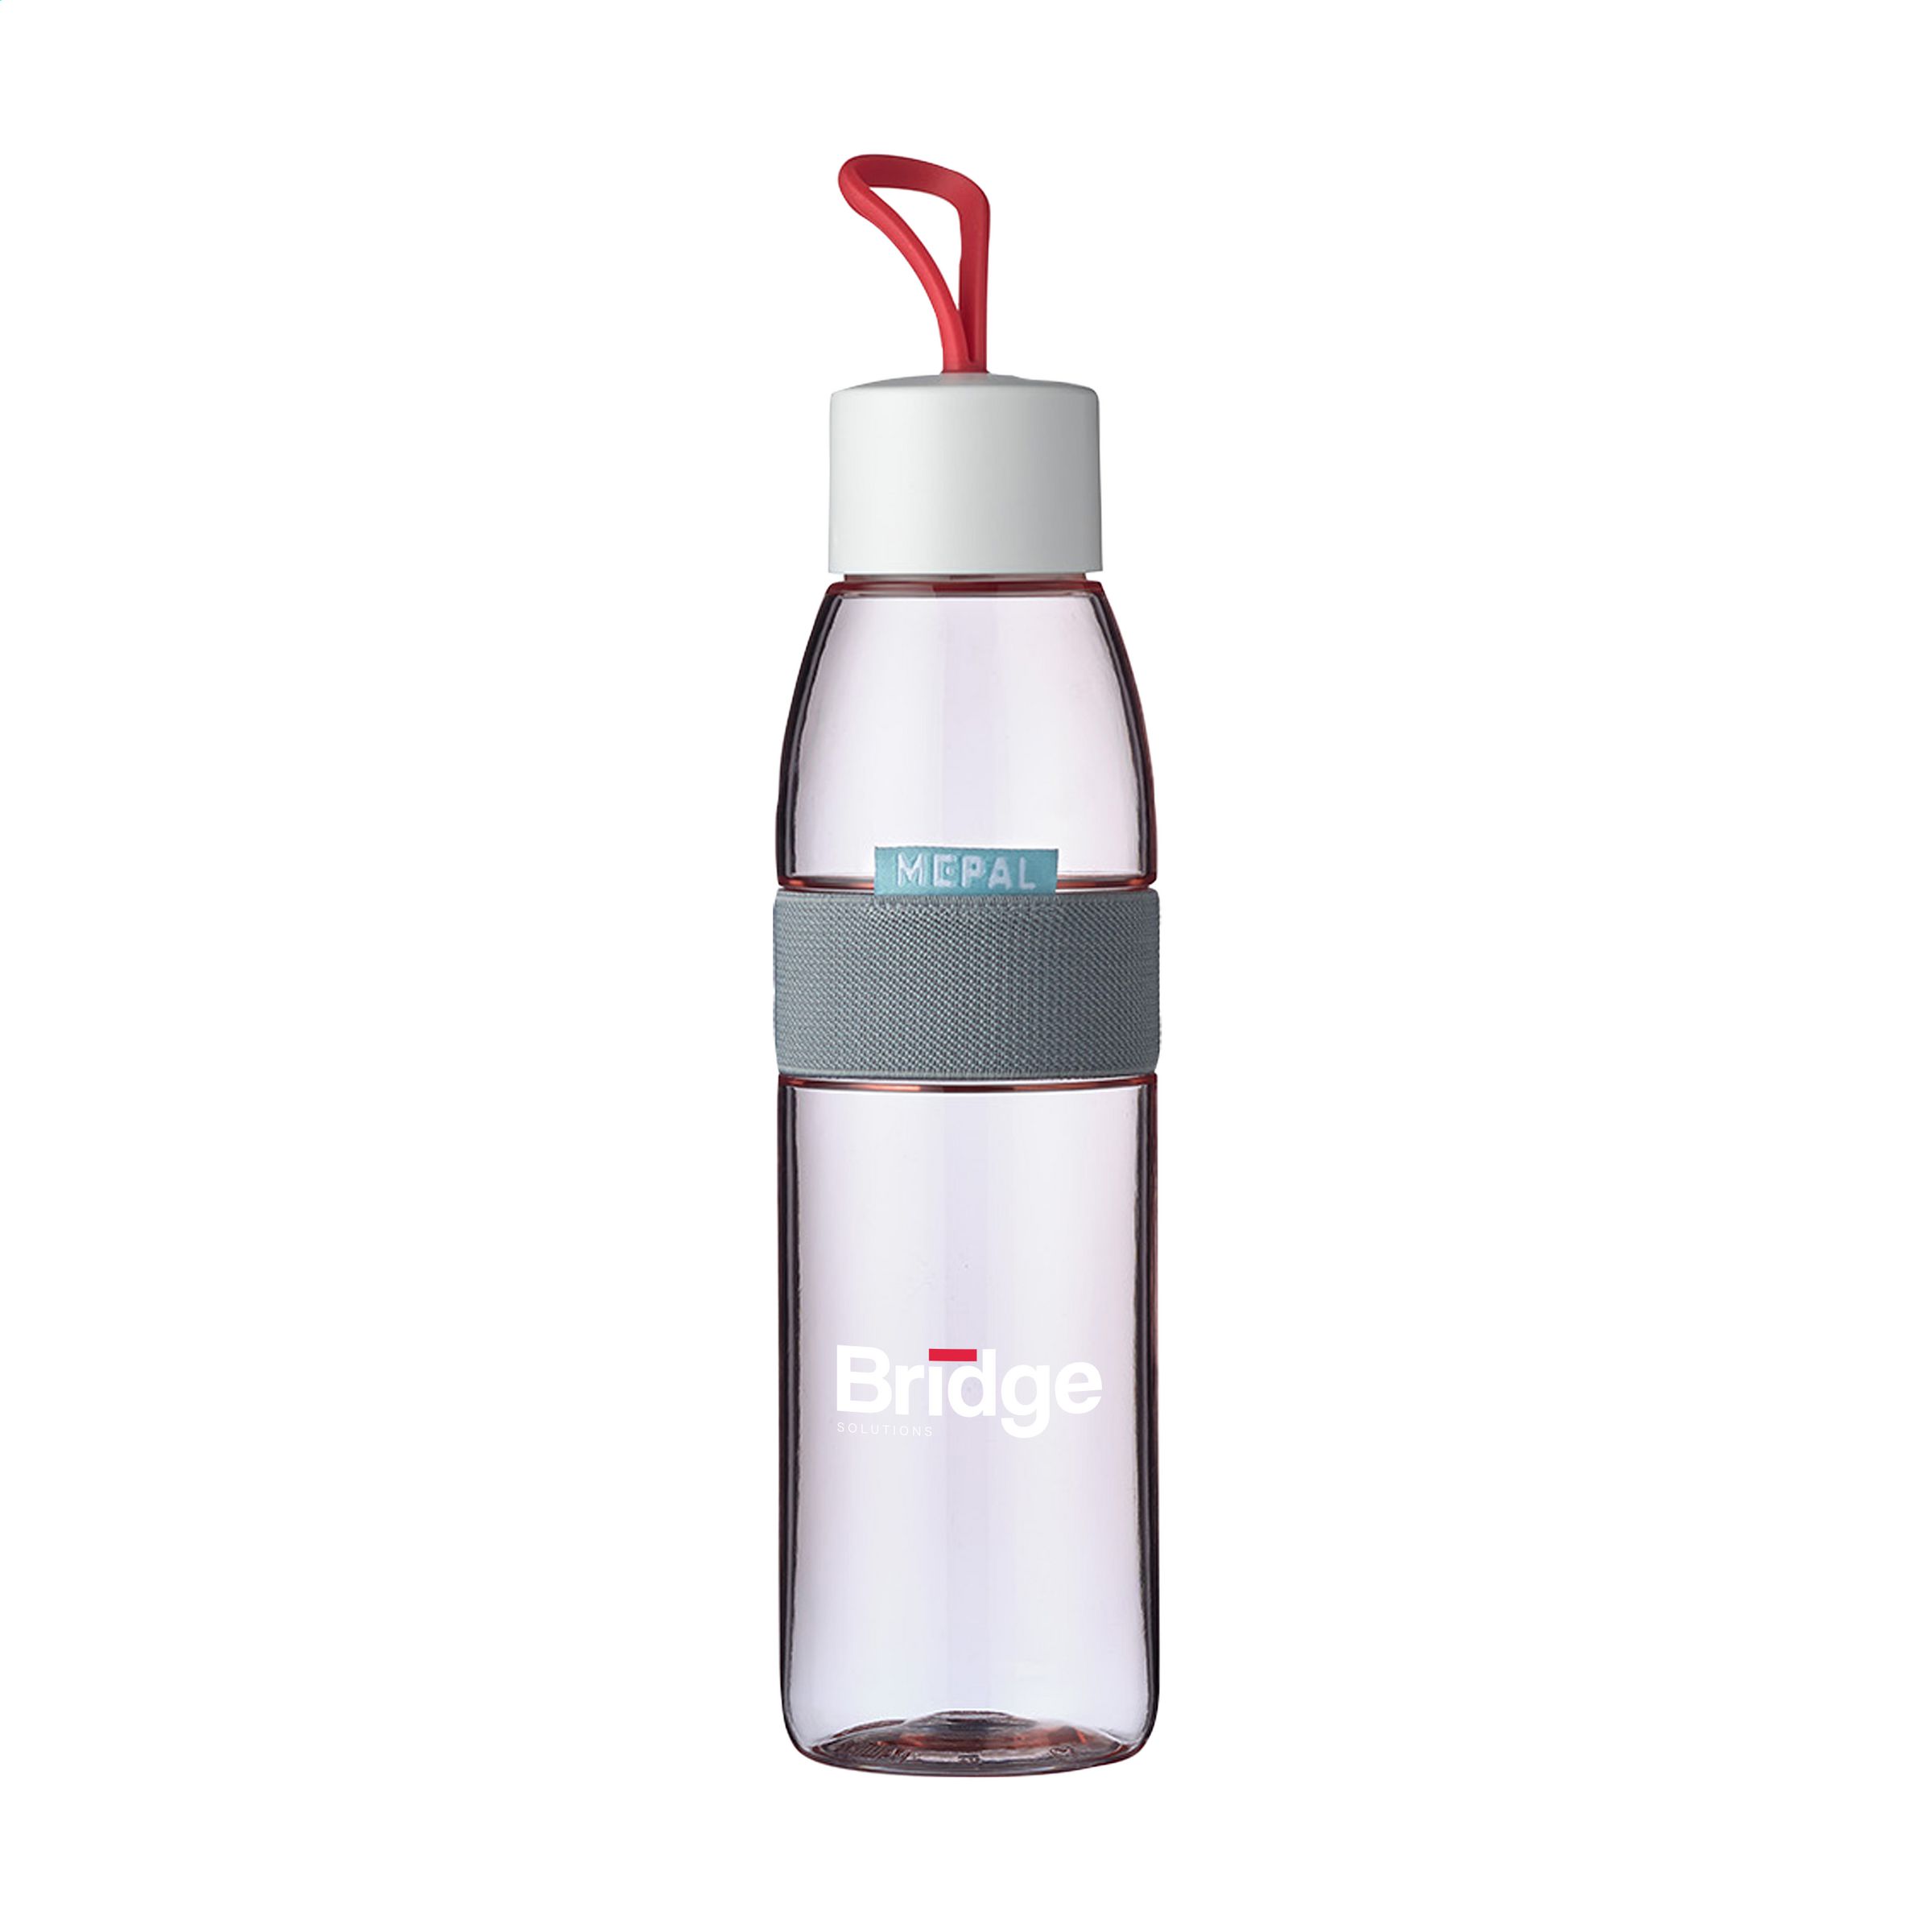 Bottiglia d'acqua in plastica ricaricabile Mepal - Puegnago sul Garda